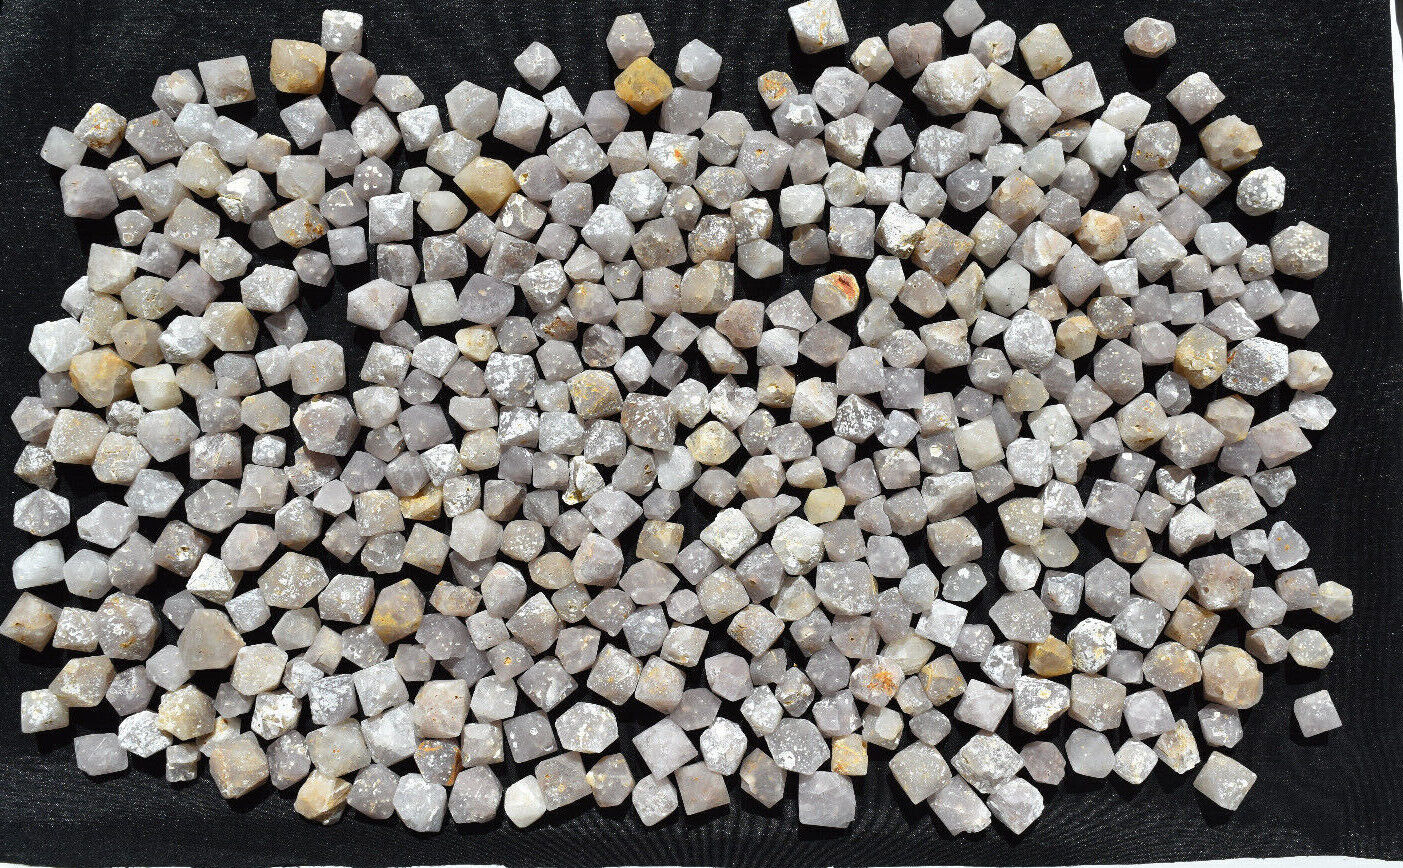 WHOLESALE Bipyramidal Beta Quartz Crystals from Indonesia 1 kg # 5286